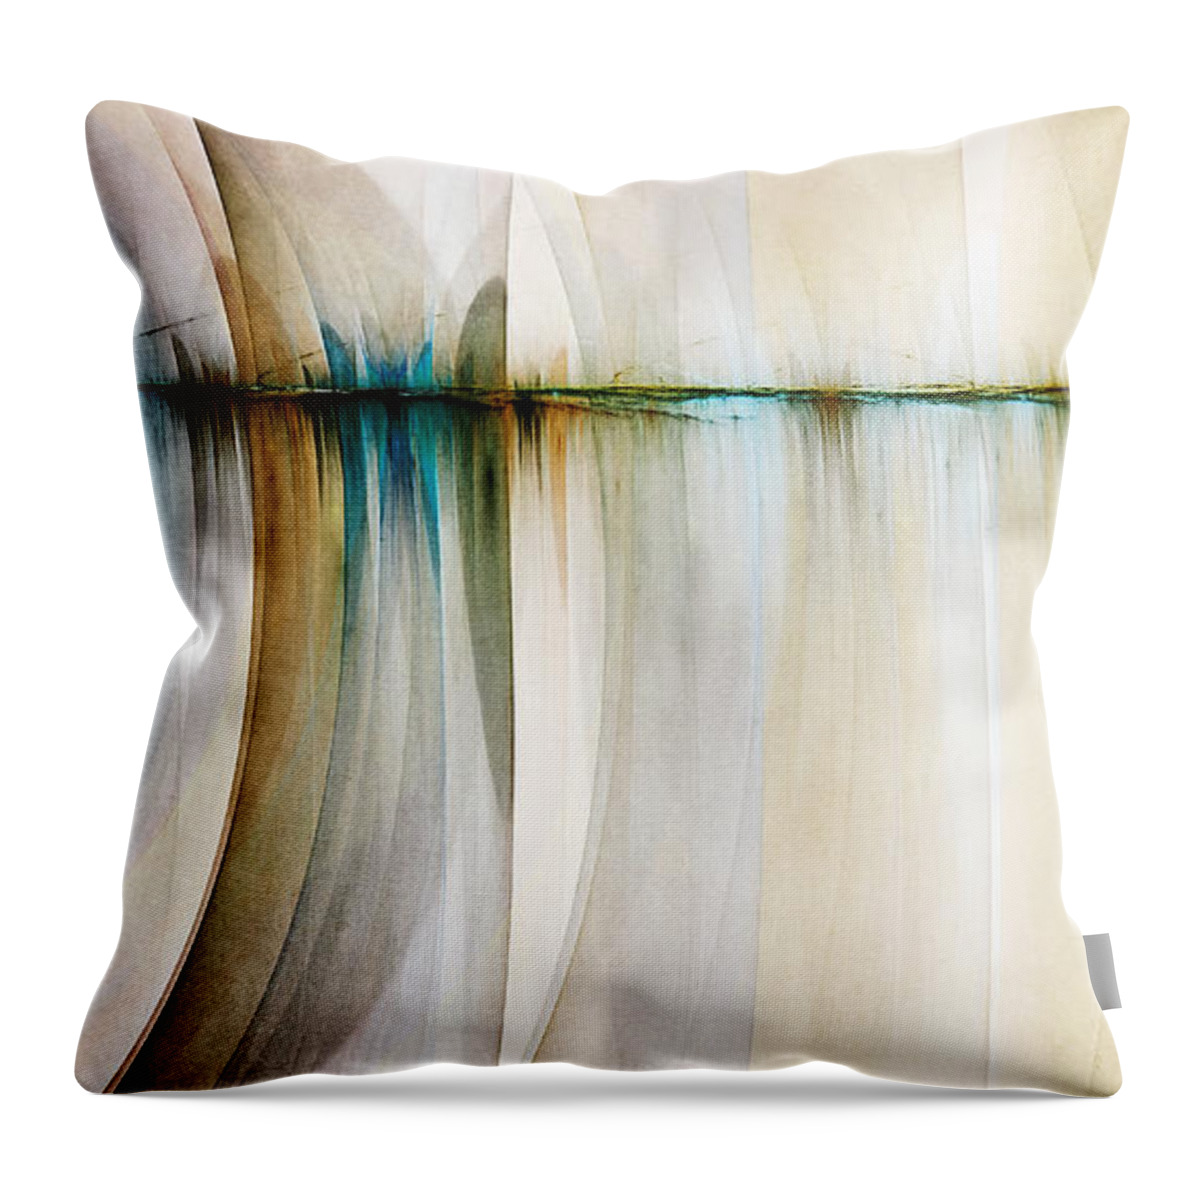 Digital Artwork Throw Pillow featuring the digital art Rift in Time by Scott Norris